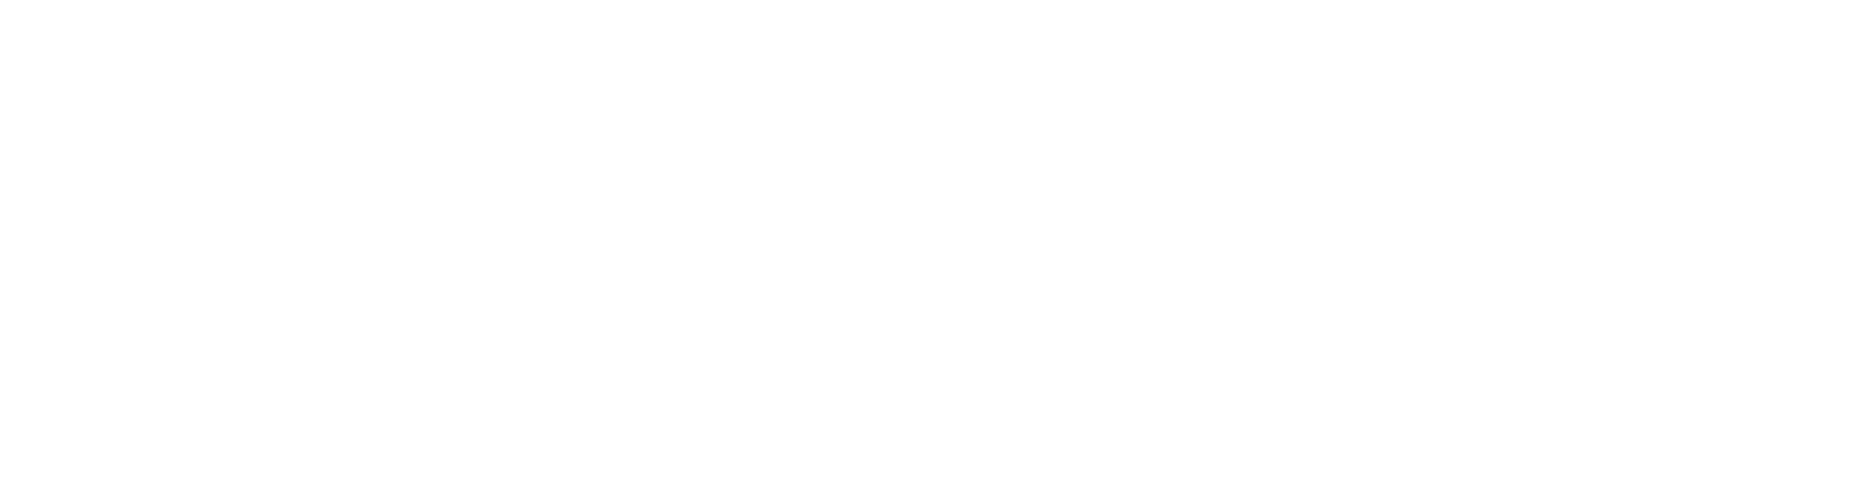 Vager logo